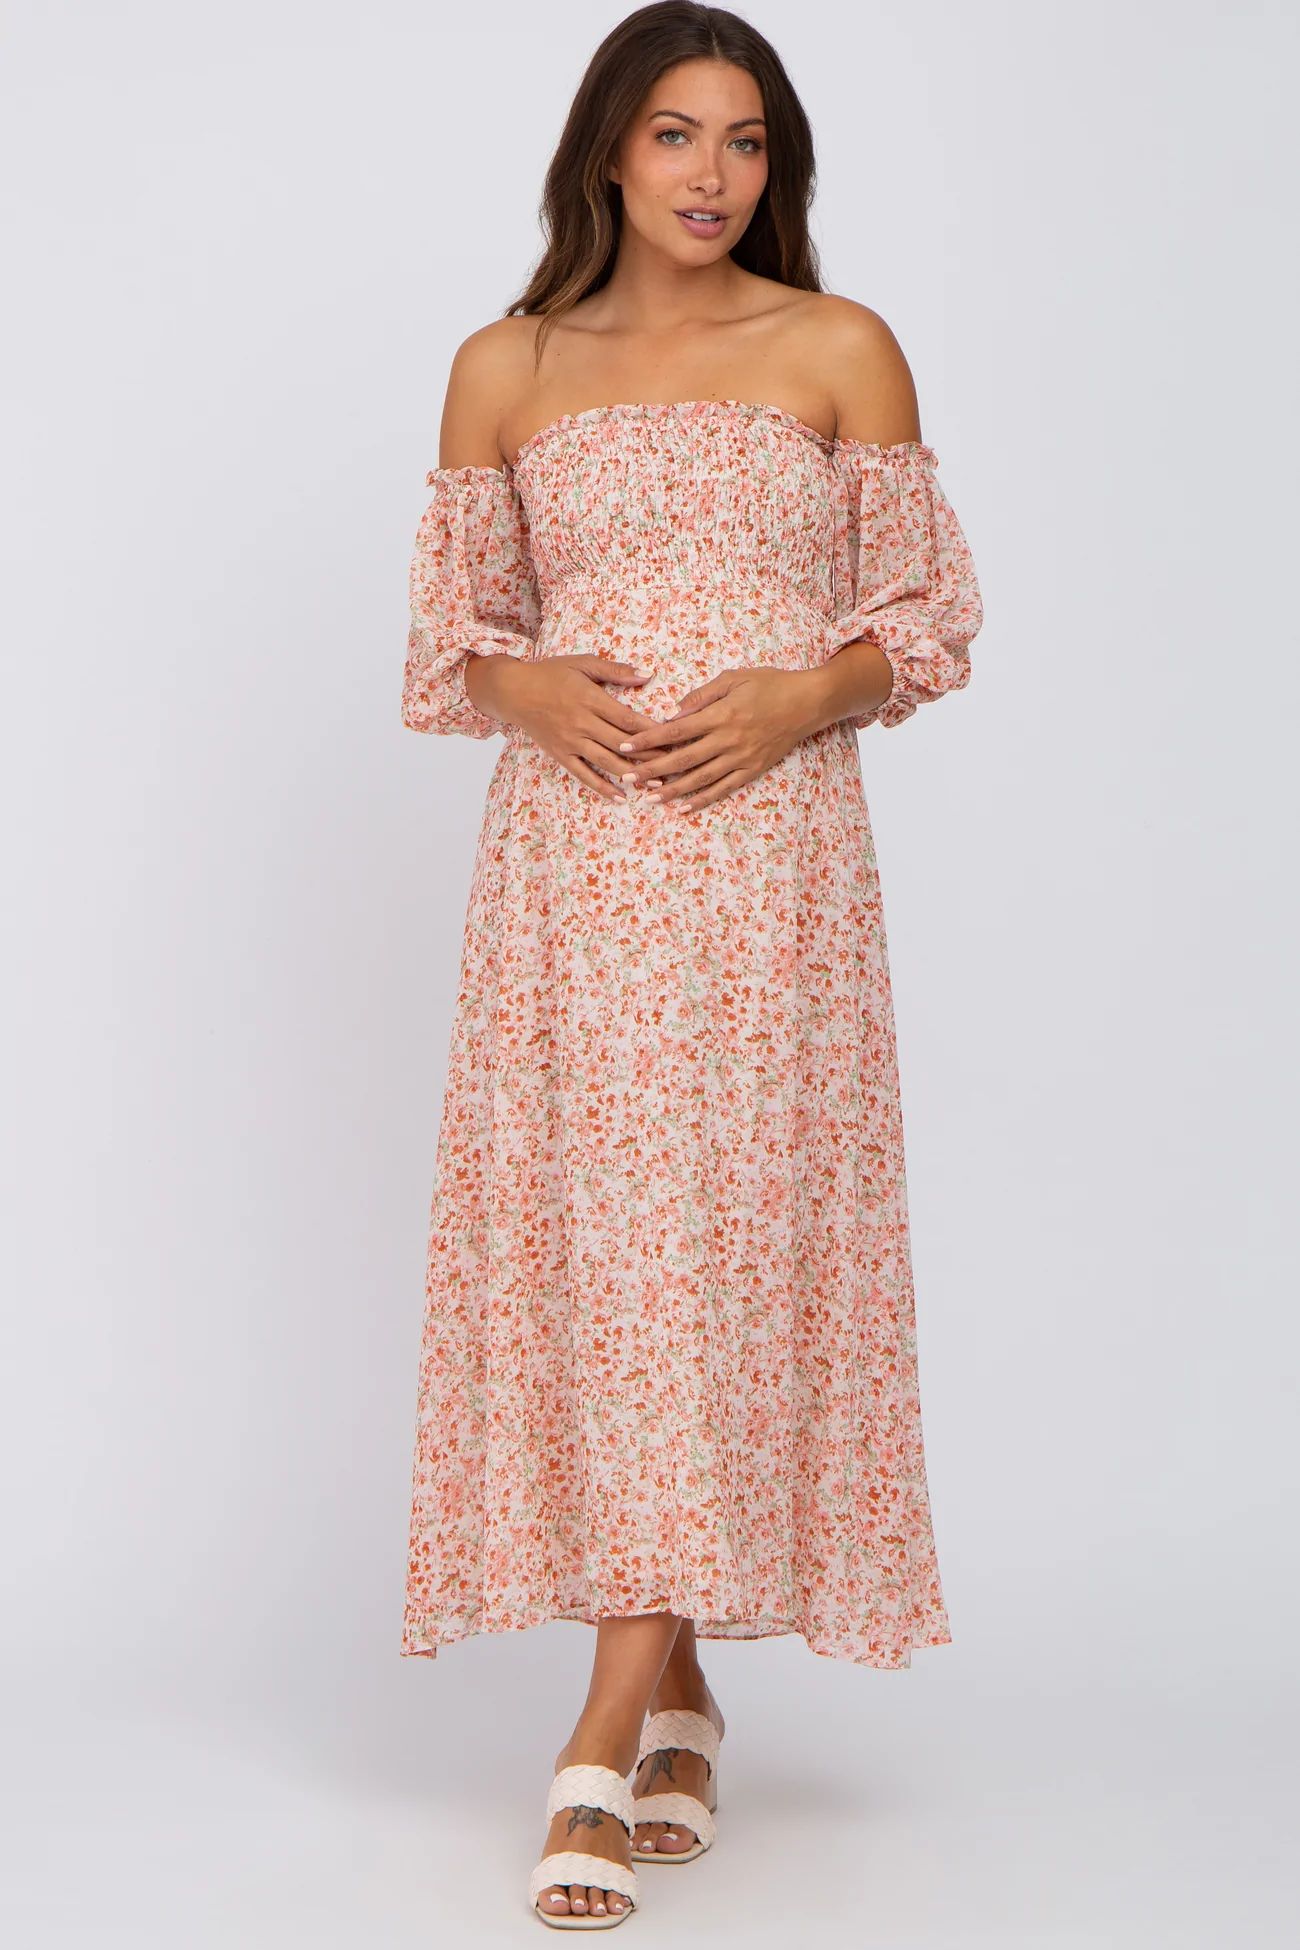 Mauve Floral Chiffon Smocked Off Shoulder Maternity Midi Dress | PinkBlush Maternity